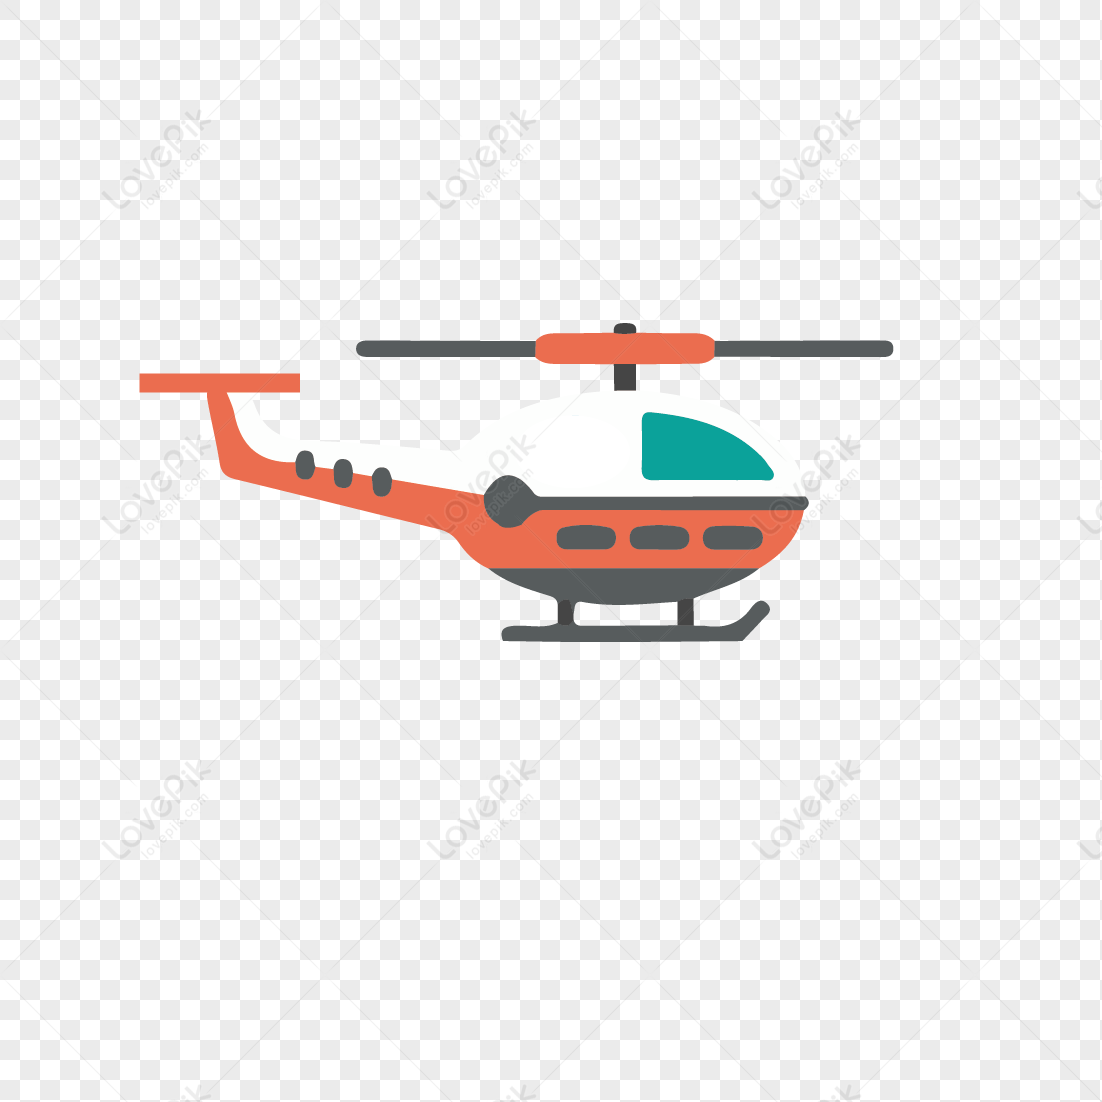 Serious, Bold, Aviation Logo Design for Helicopter Dynamics LLC by  syrwebdevelopment | Design #23264135